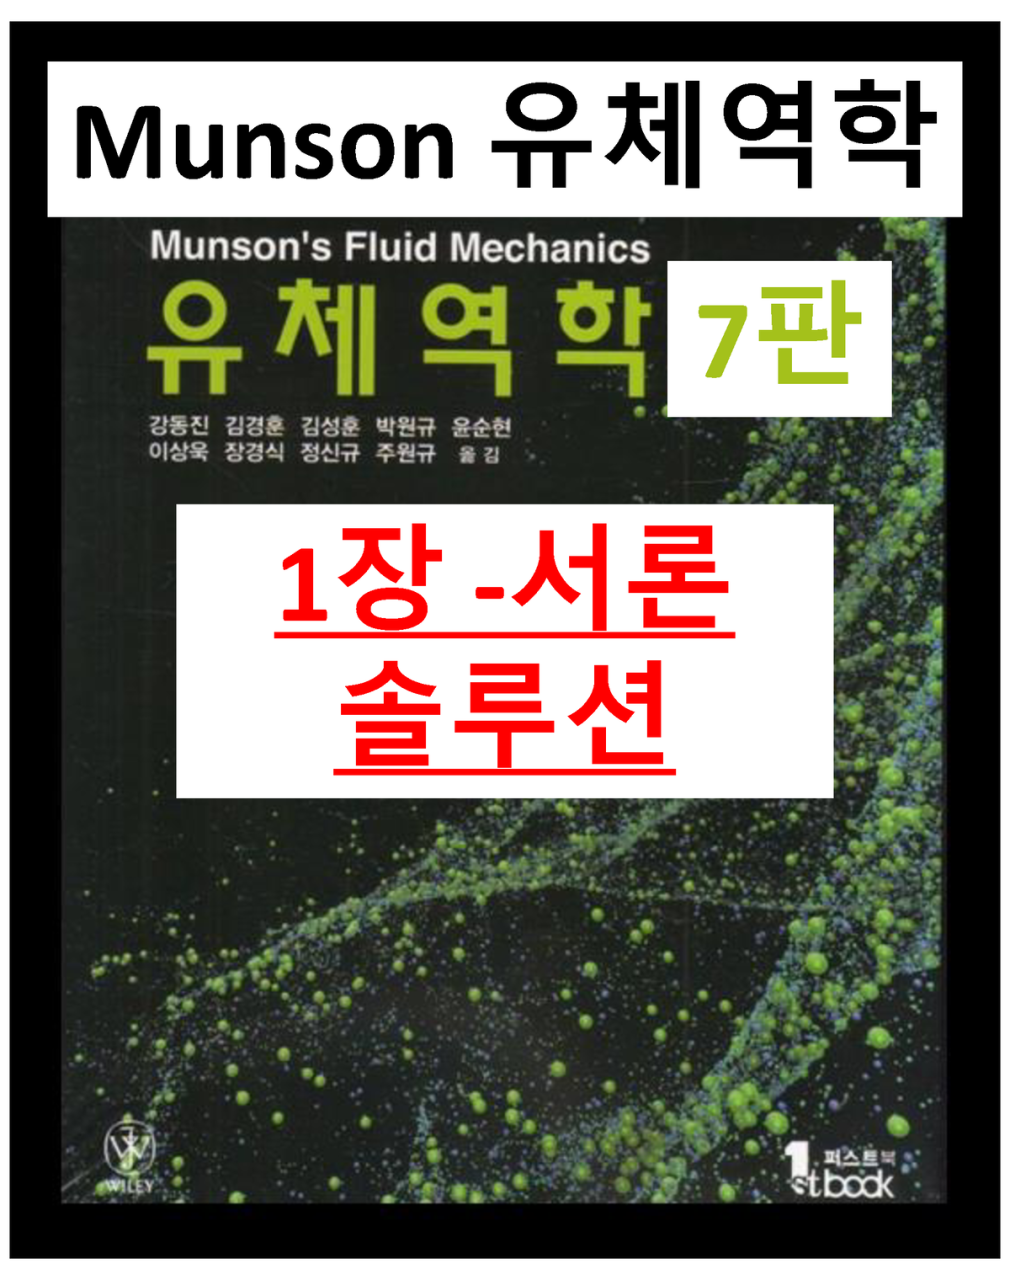 Munson 유체역학 1장 솔루션 Sejong University - 유체역학 - 1 장 - 서론 솔루션 7 판 Munson 유체역학 - Studocu